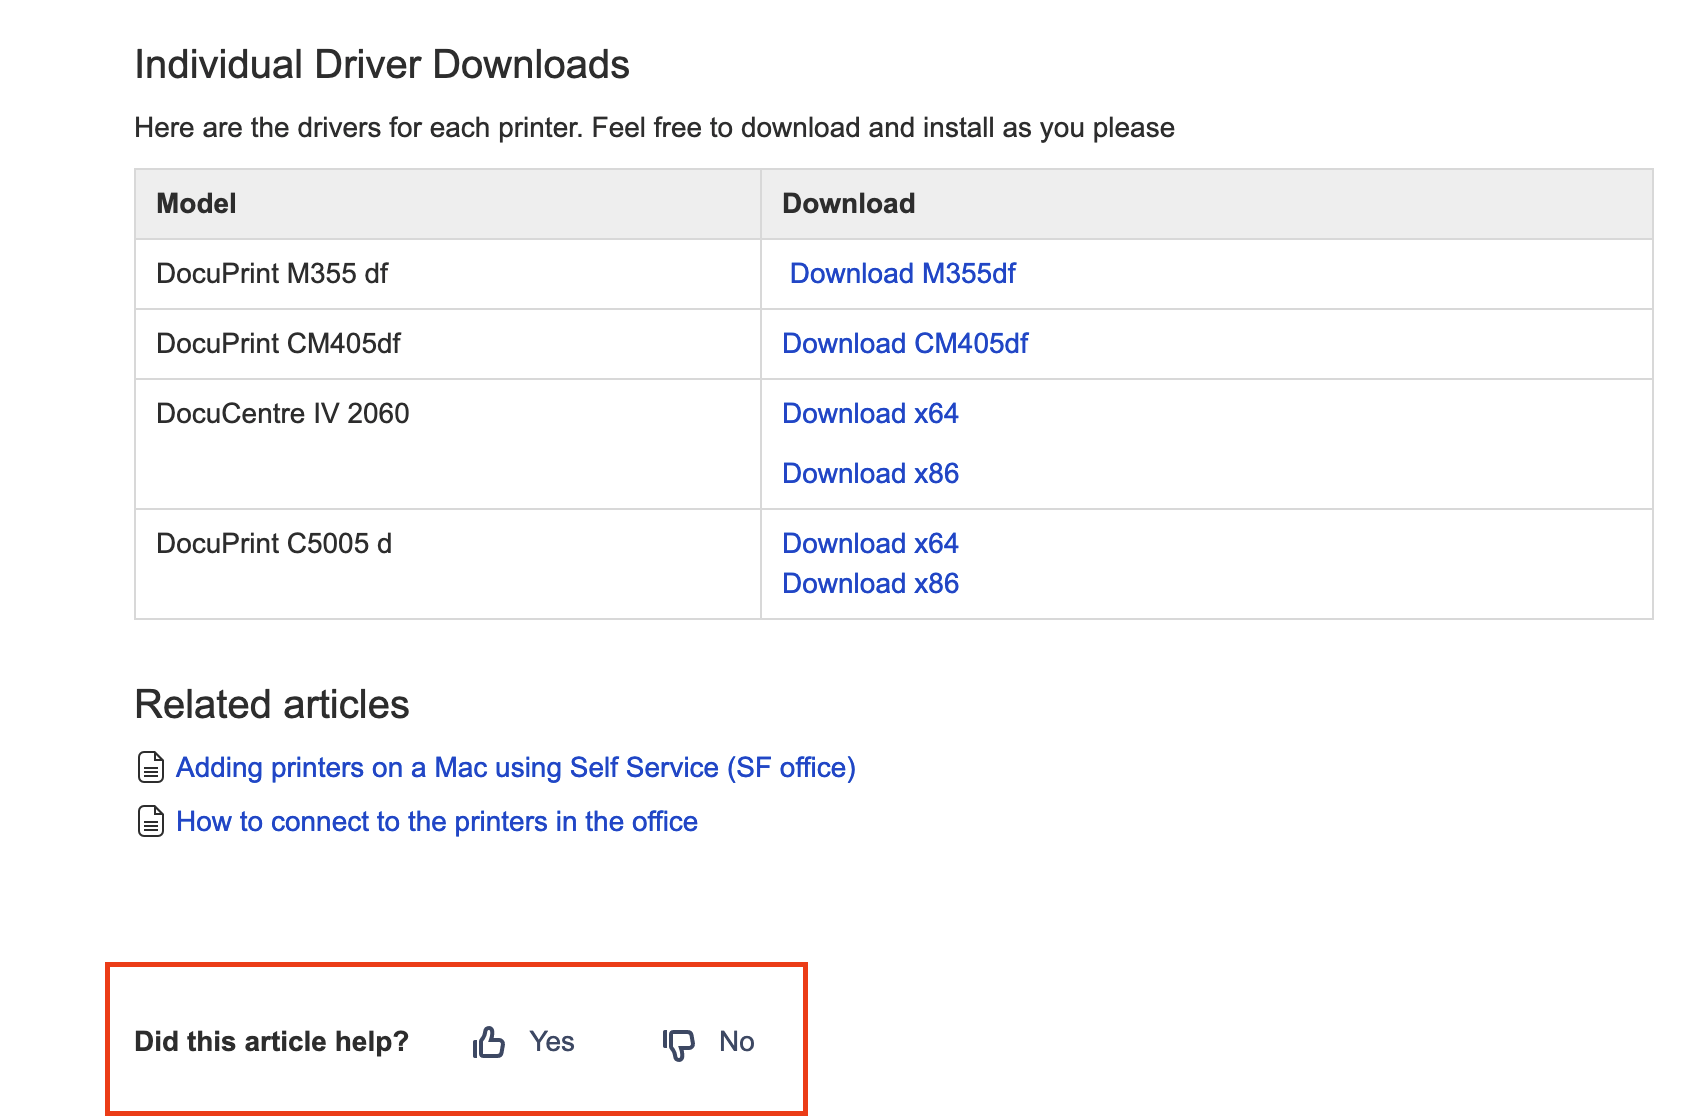 Individual driver downloads image